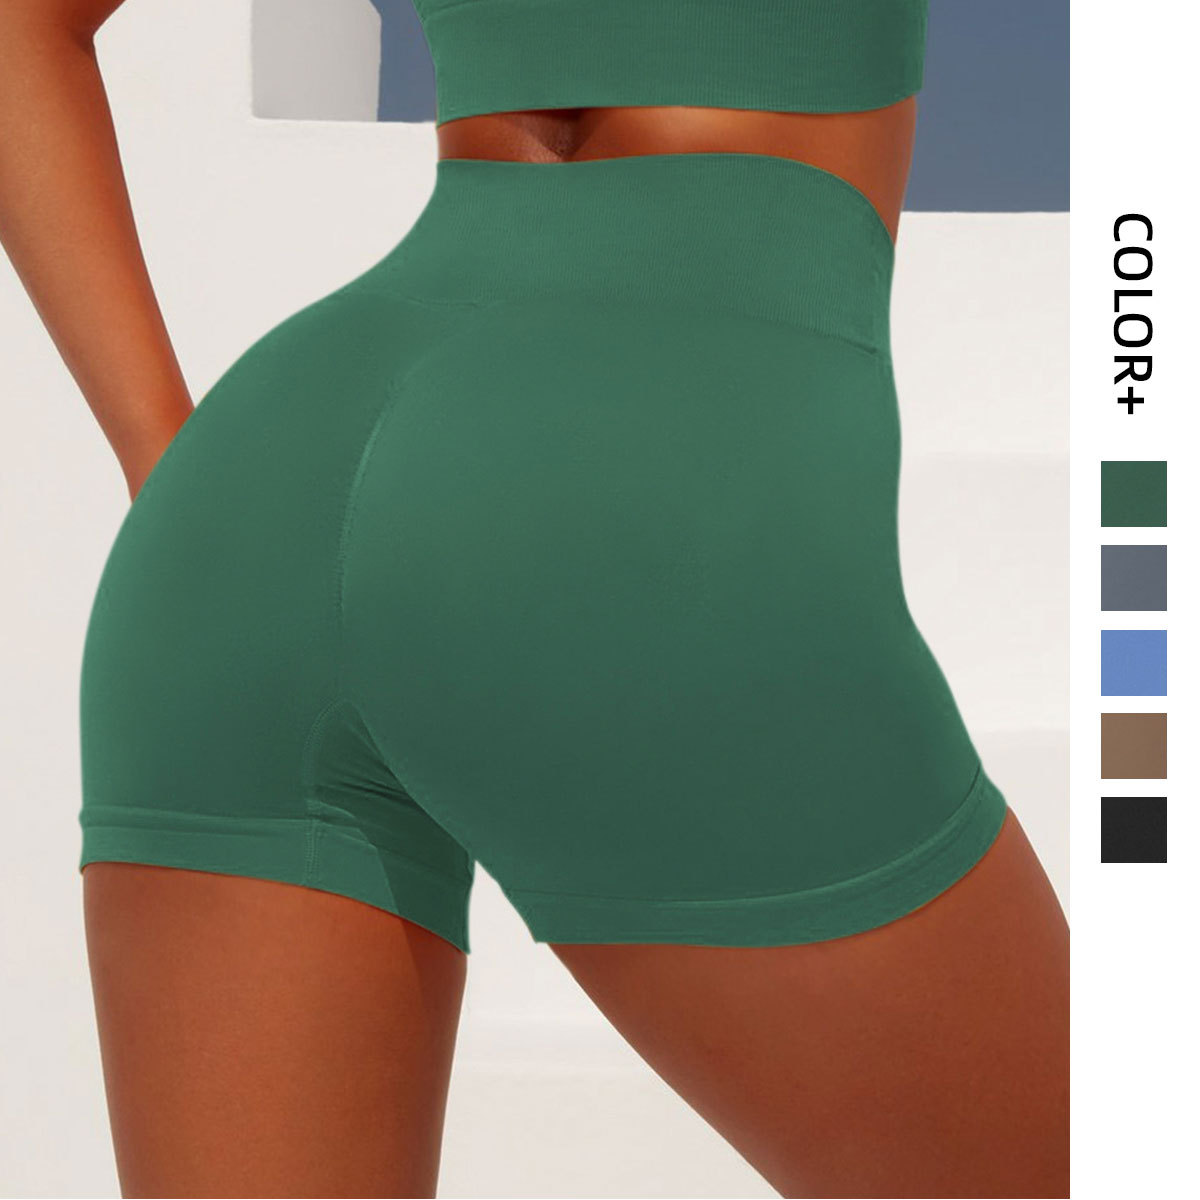 Custom Fit Classic Seamless Yoga Shorts | ZHIHUI Featured Image